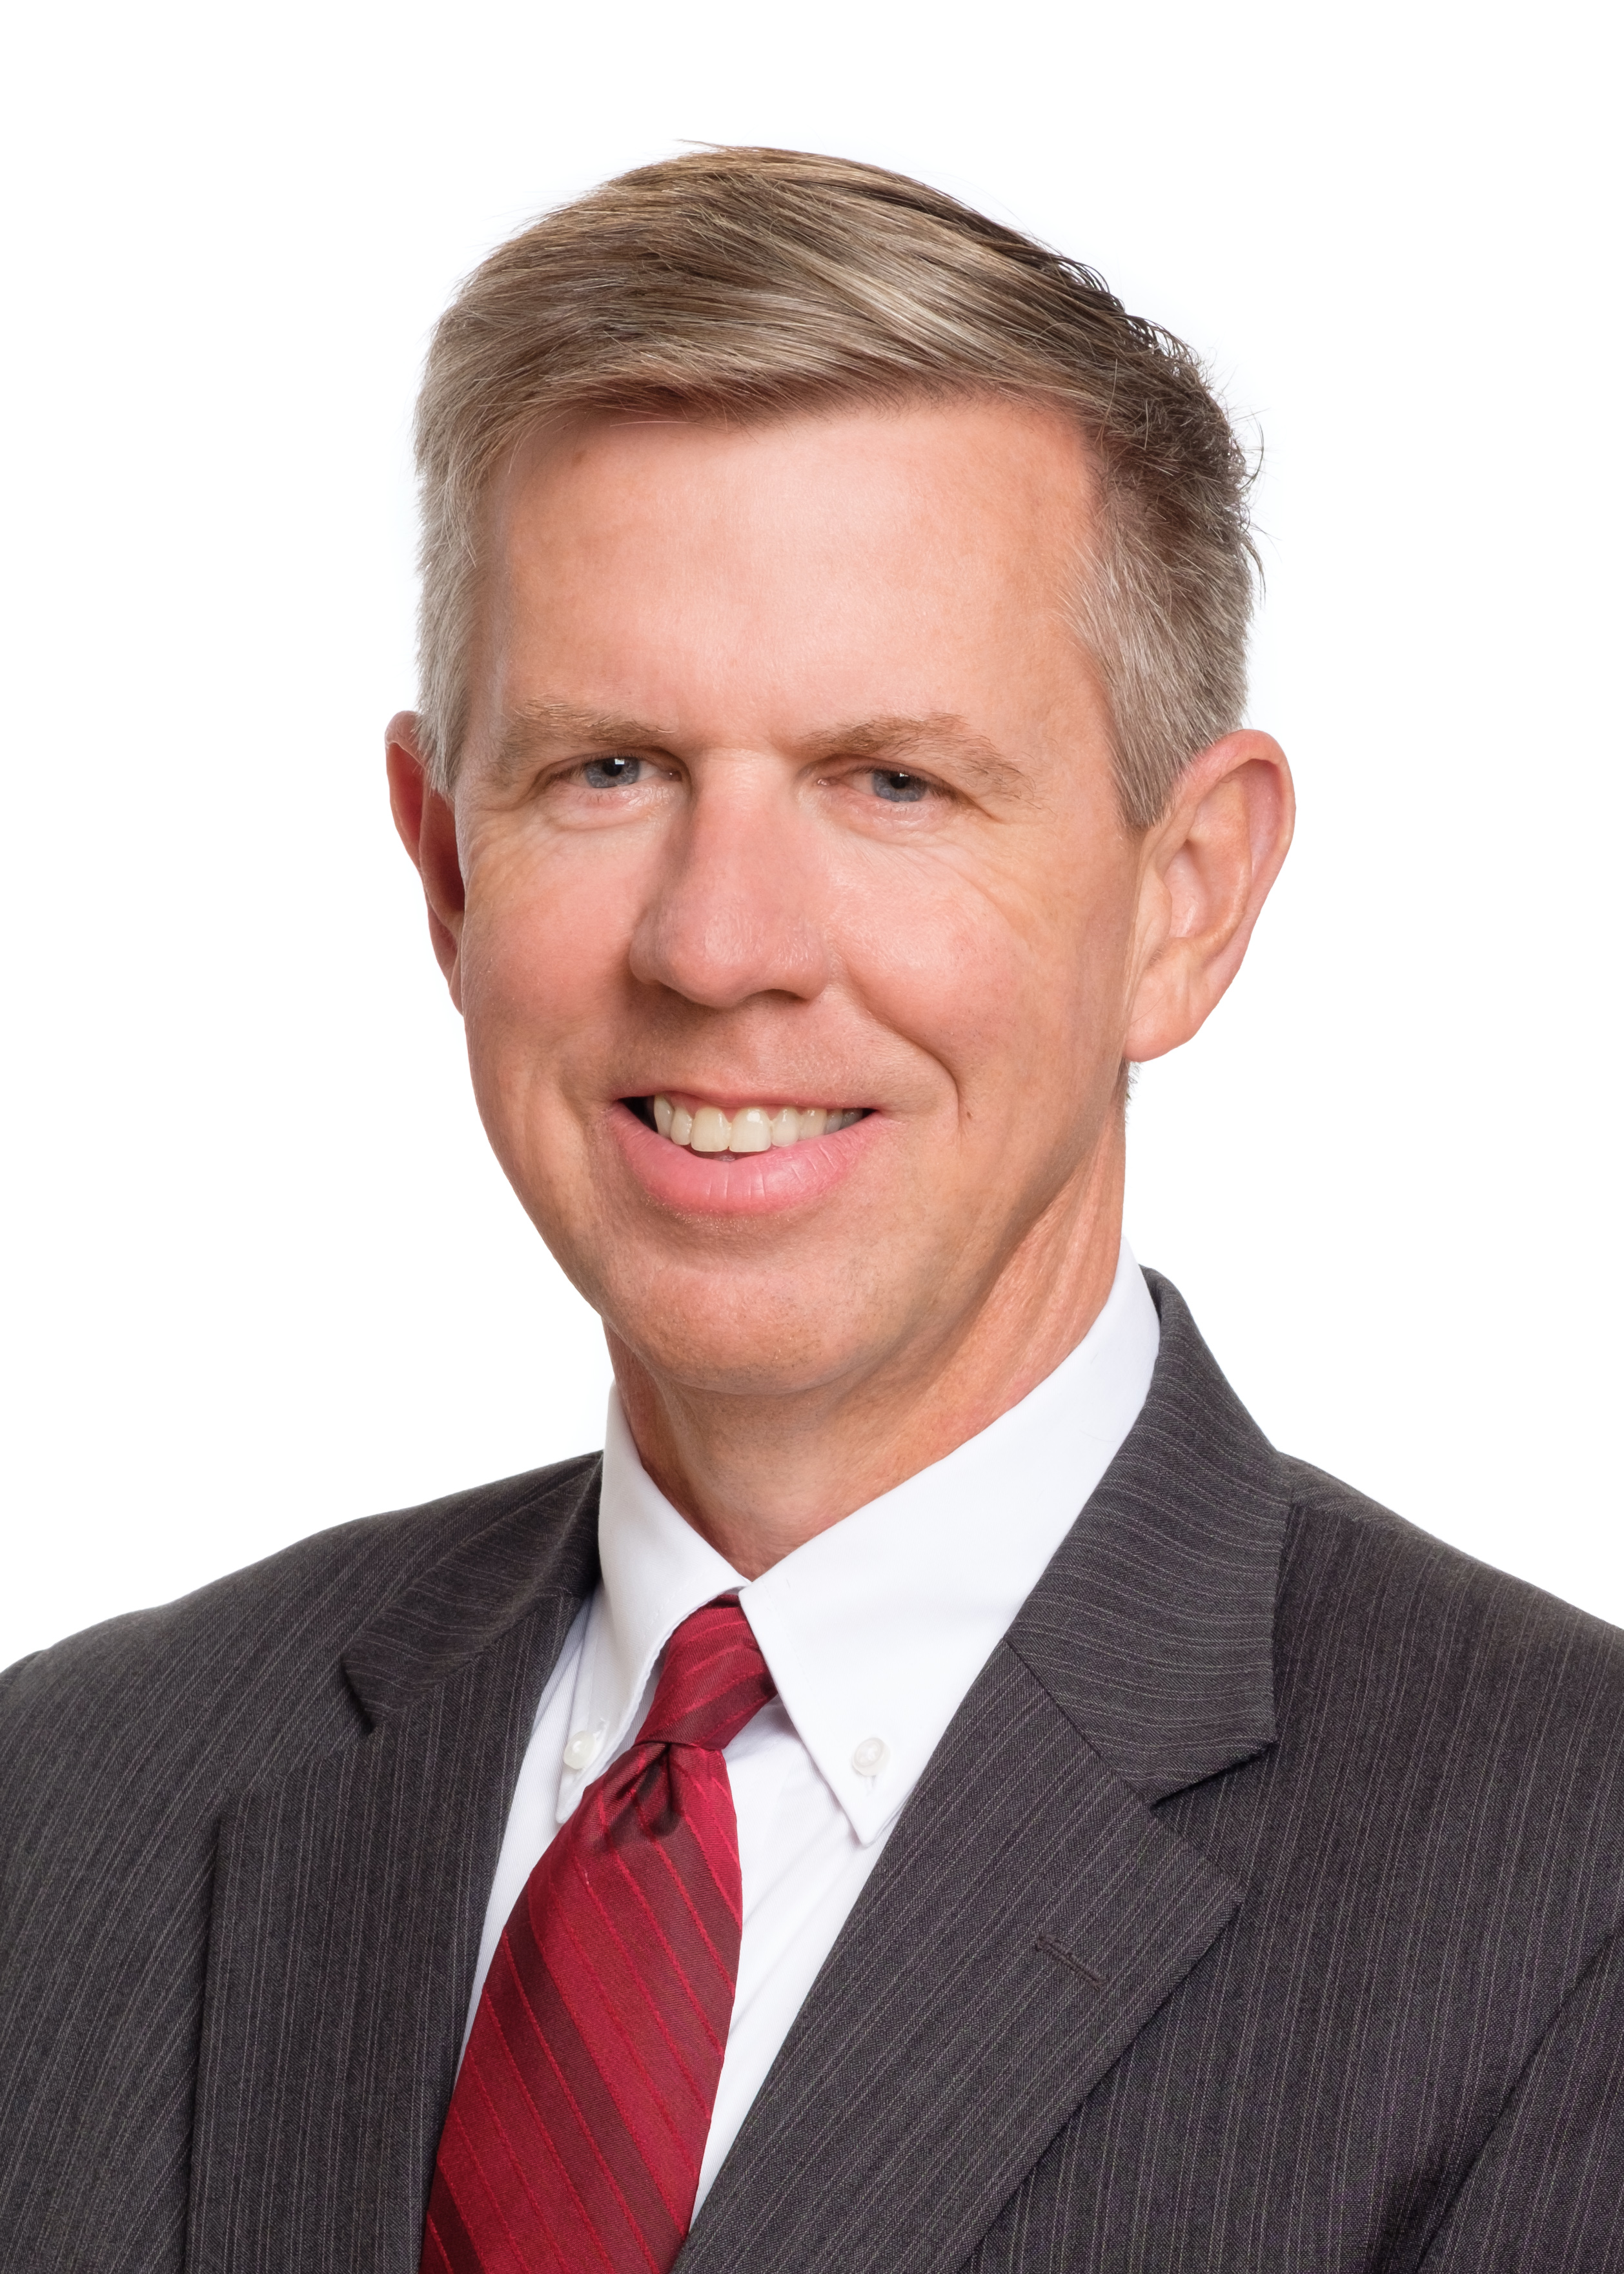 David J. Lundgren, Jr., CFA